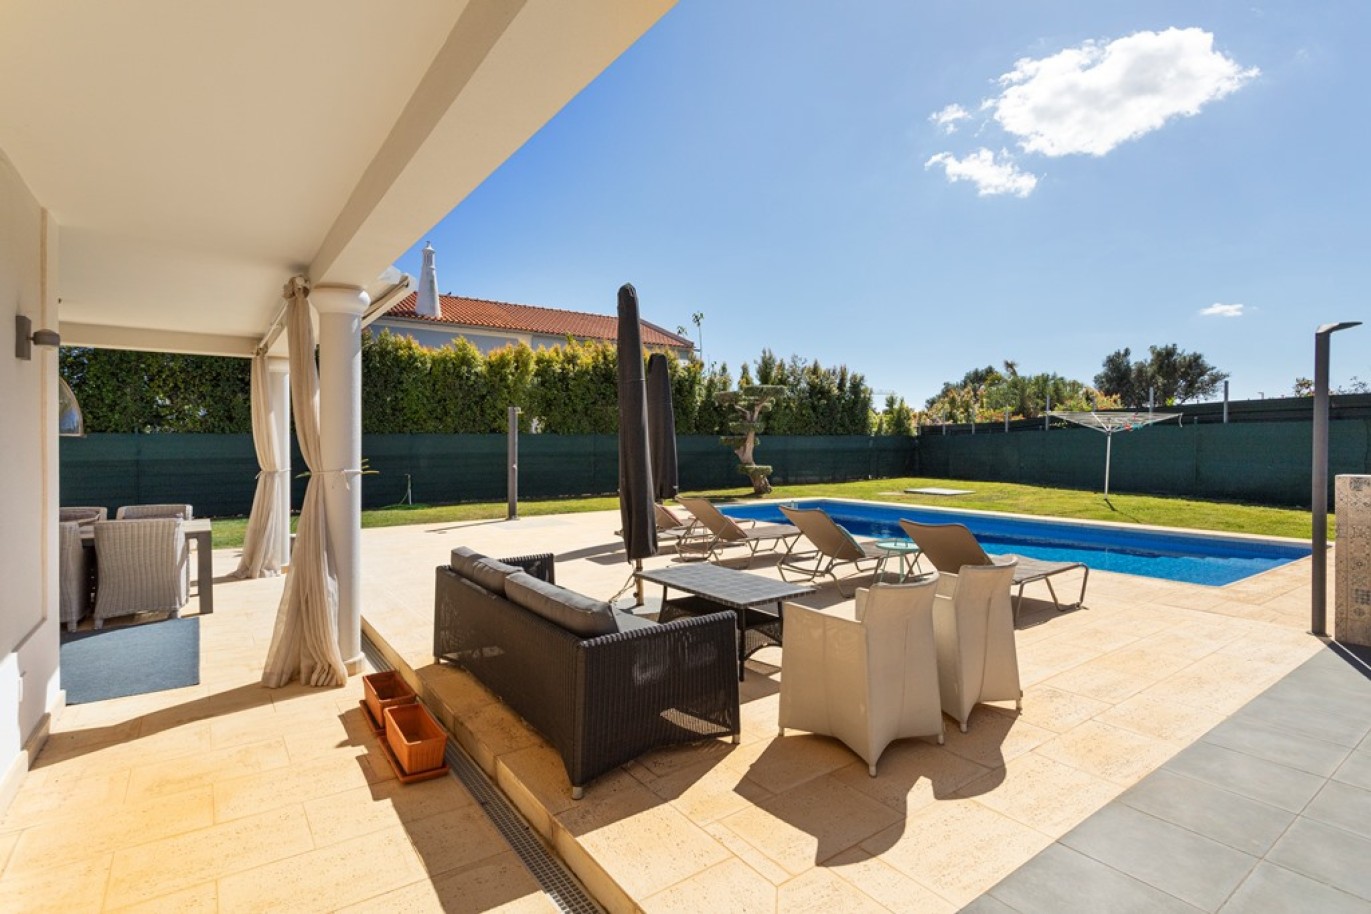 Moradia V5 com piscina, para venda em Vilamoura, Algarve_264471